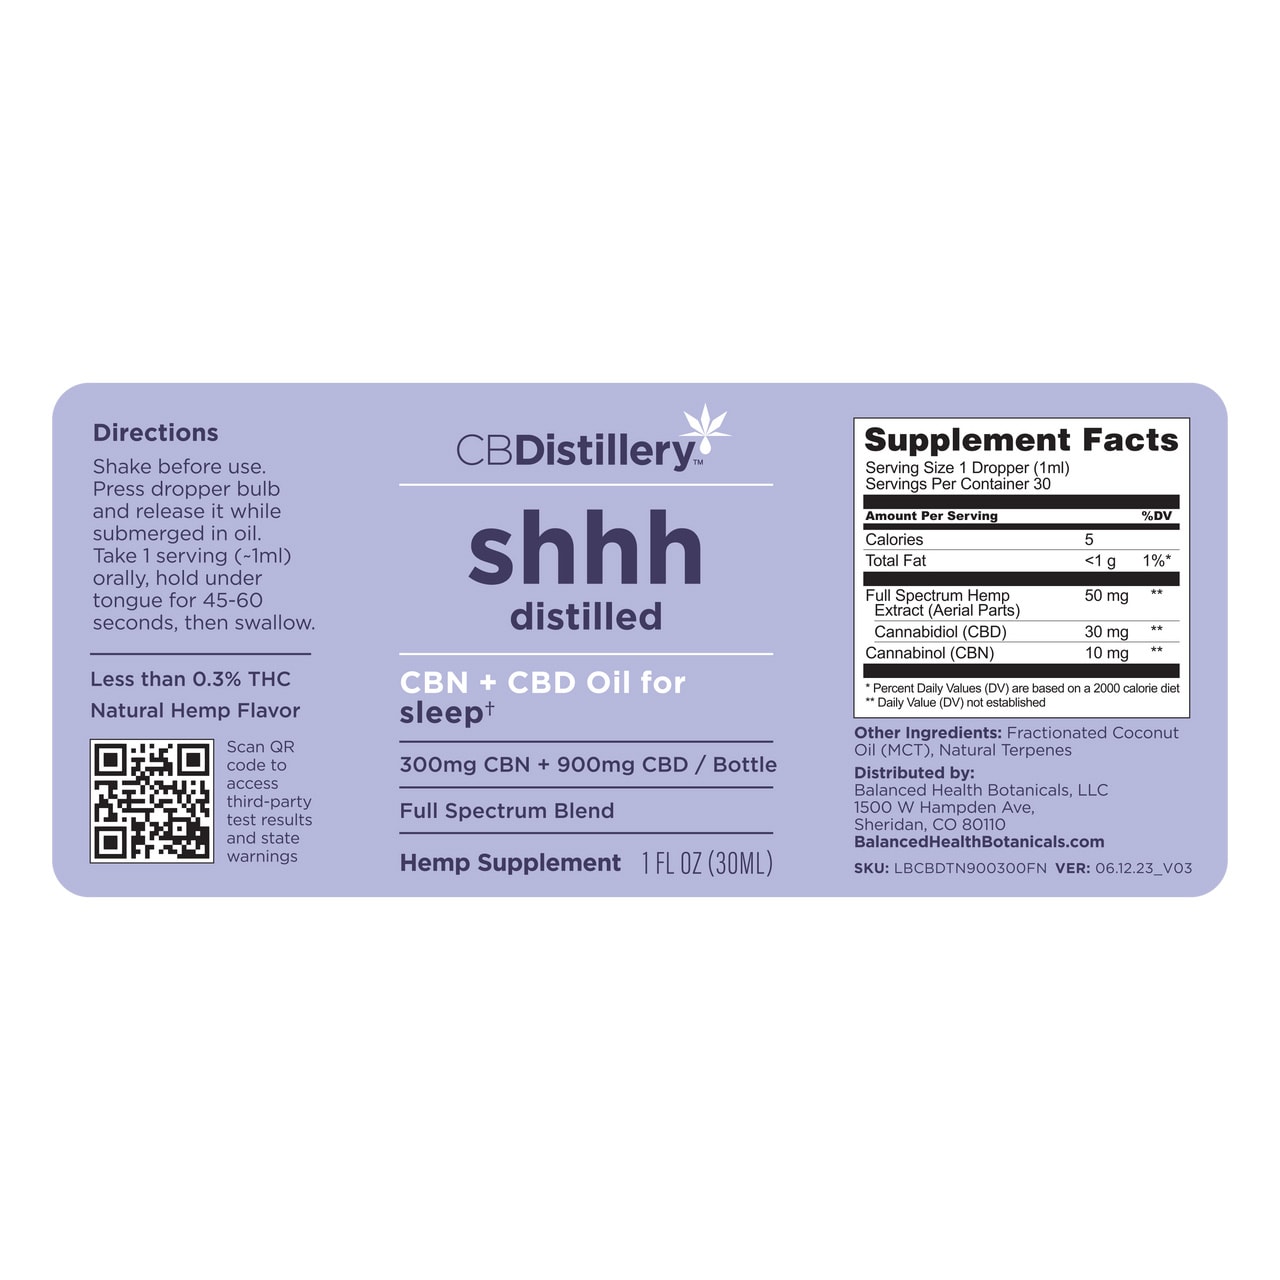 CBDistillery, Shhh Distilled CBN + CBD Oil For Sleep, Full Spectrum, 1oz, 300mg CBN and 900mg CBD